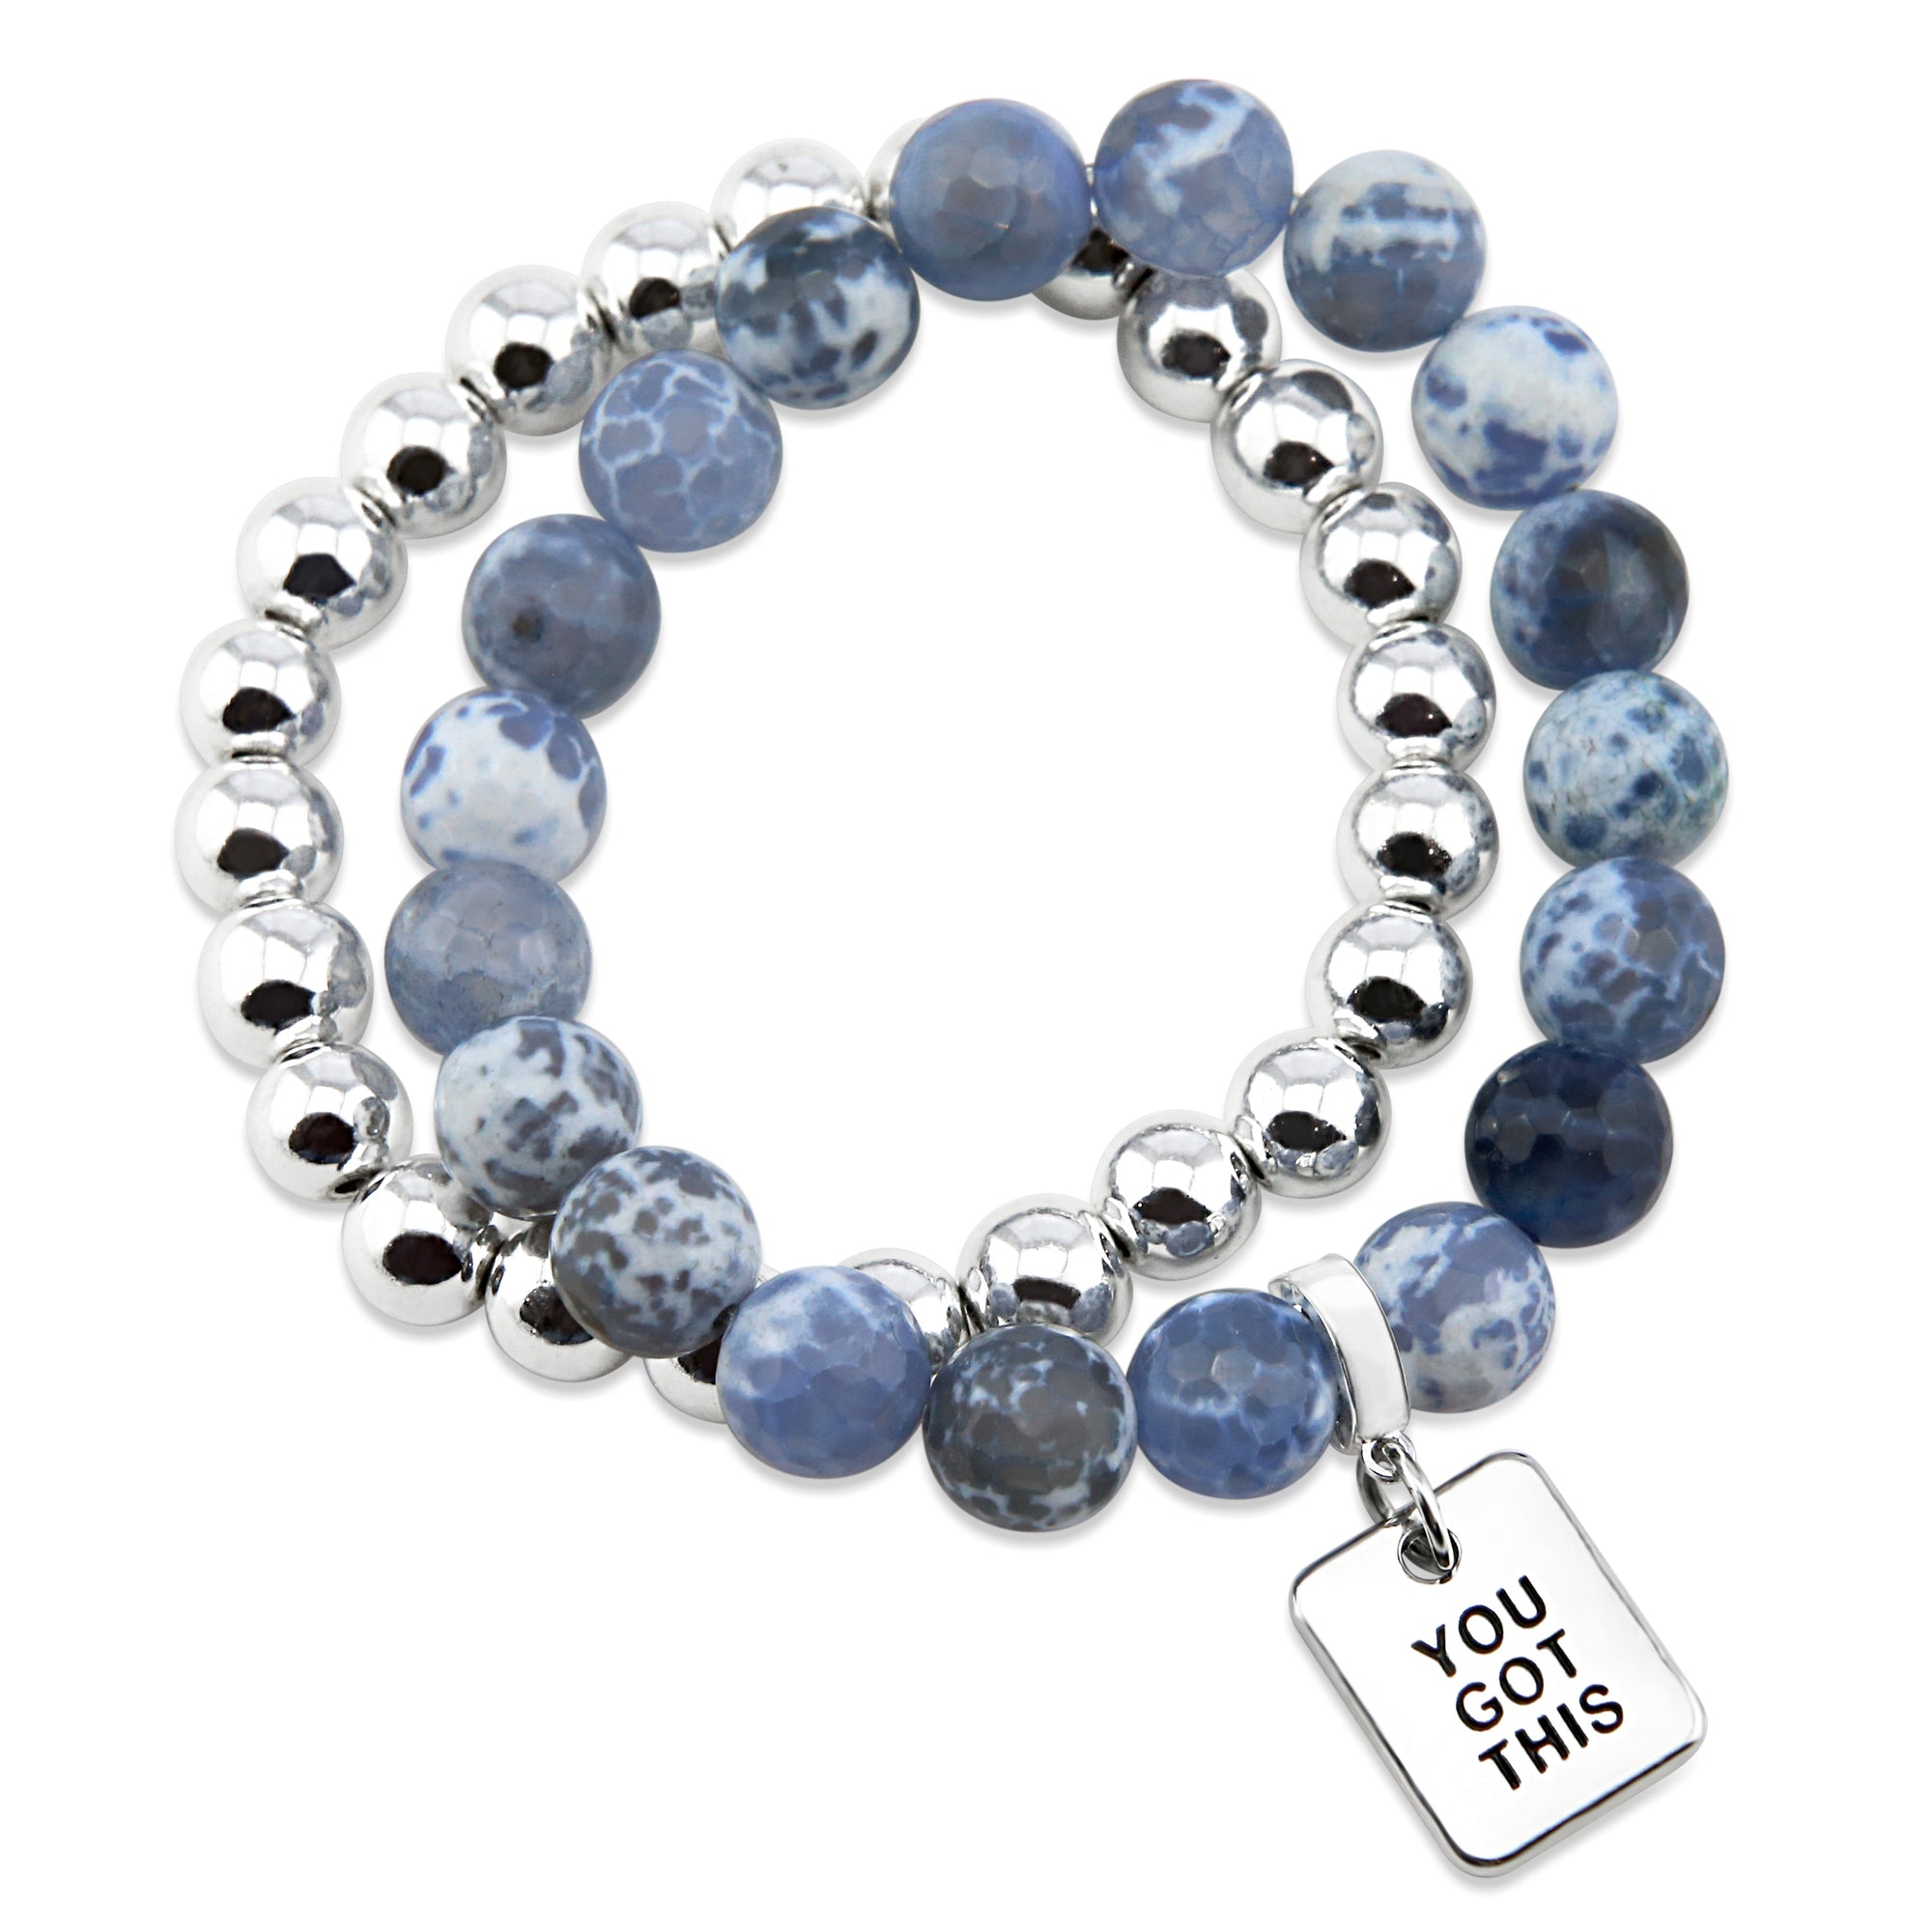 Bracelet Duo! 10mm Bright Blue Agata Tourmaline & 8mm Silver bead bracelet stacker set - You Got This (12021)